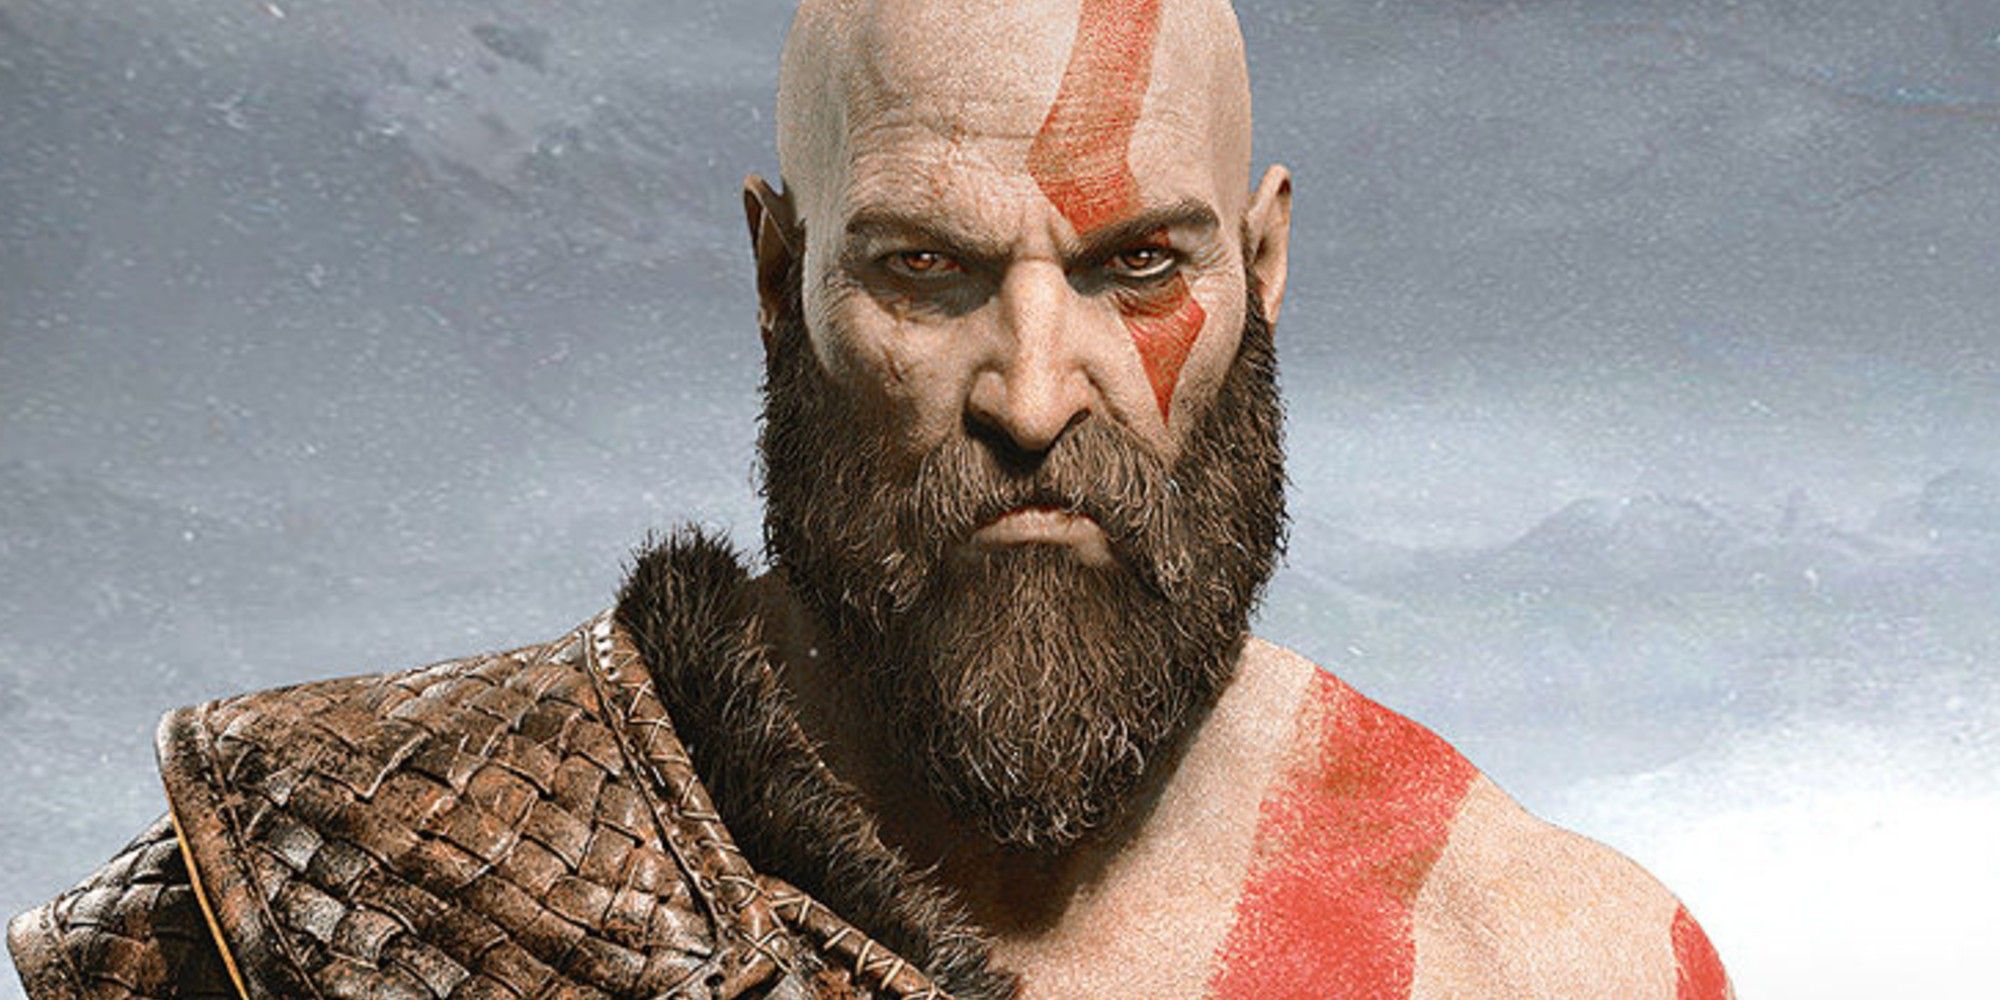 kratos staring menacingly in god of war